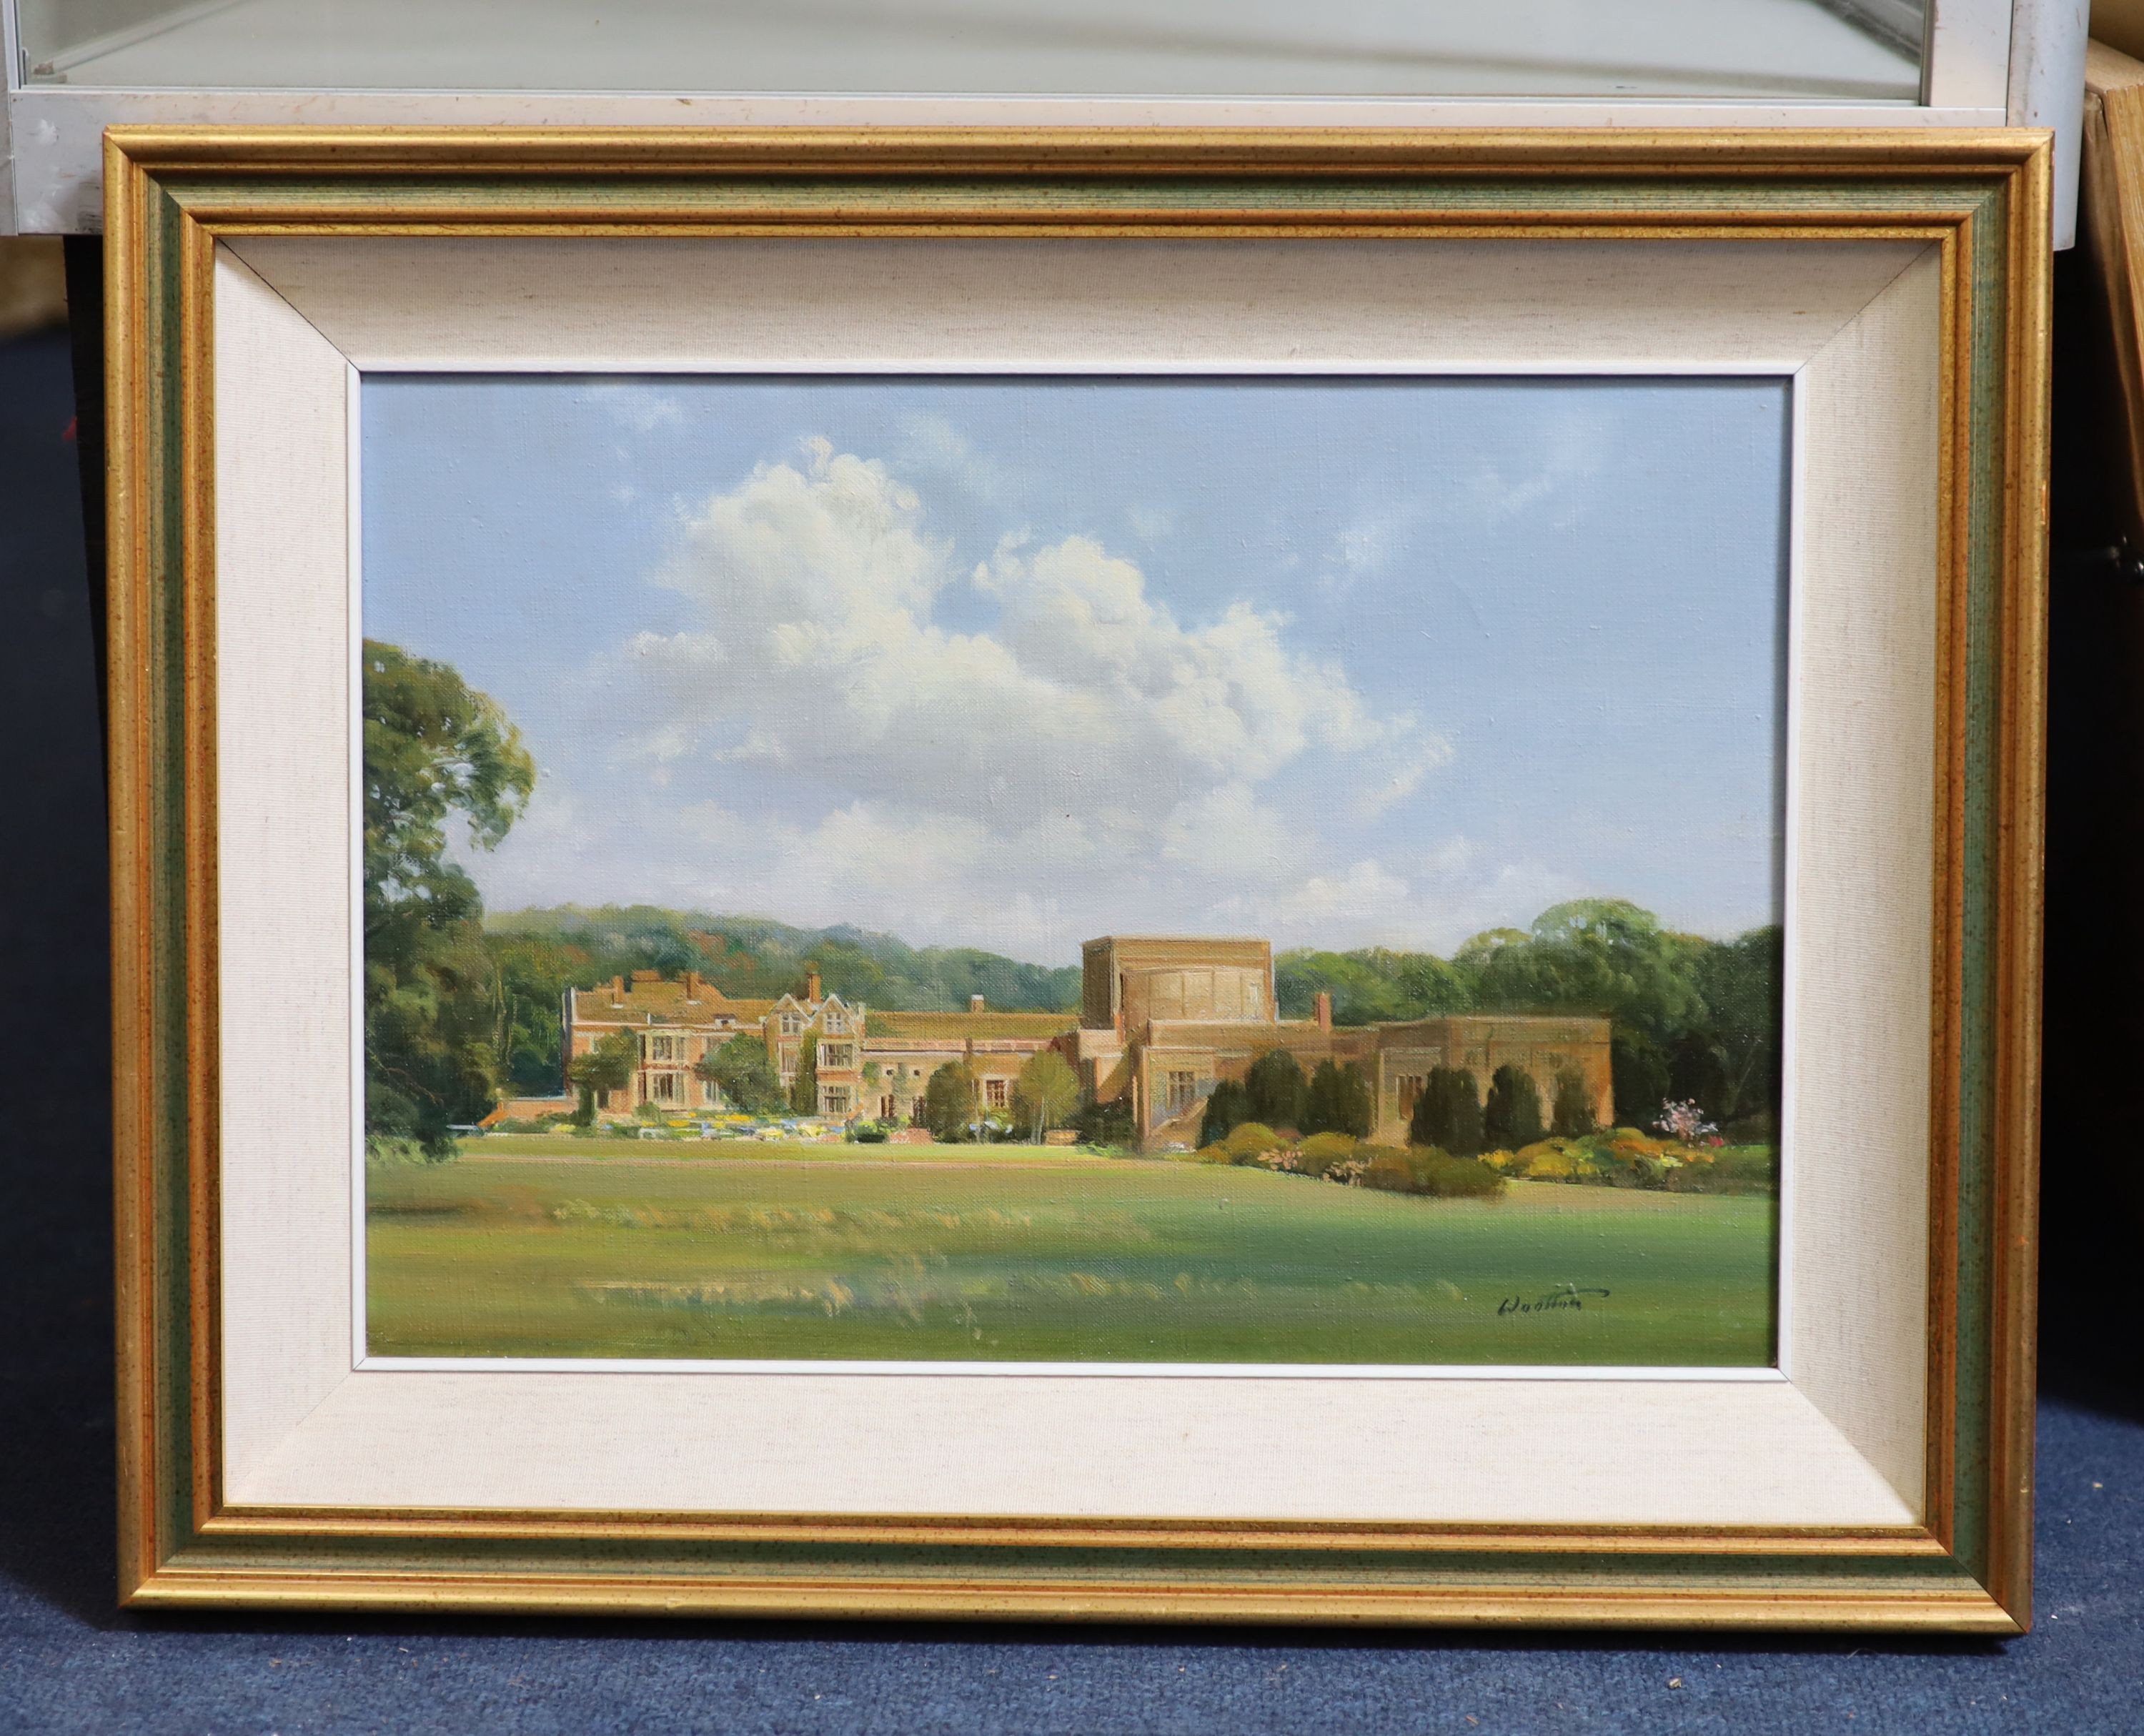 Frank Wootton (1914-1998), Glyndebourne, Oil on canvas, 28 x 40cm.